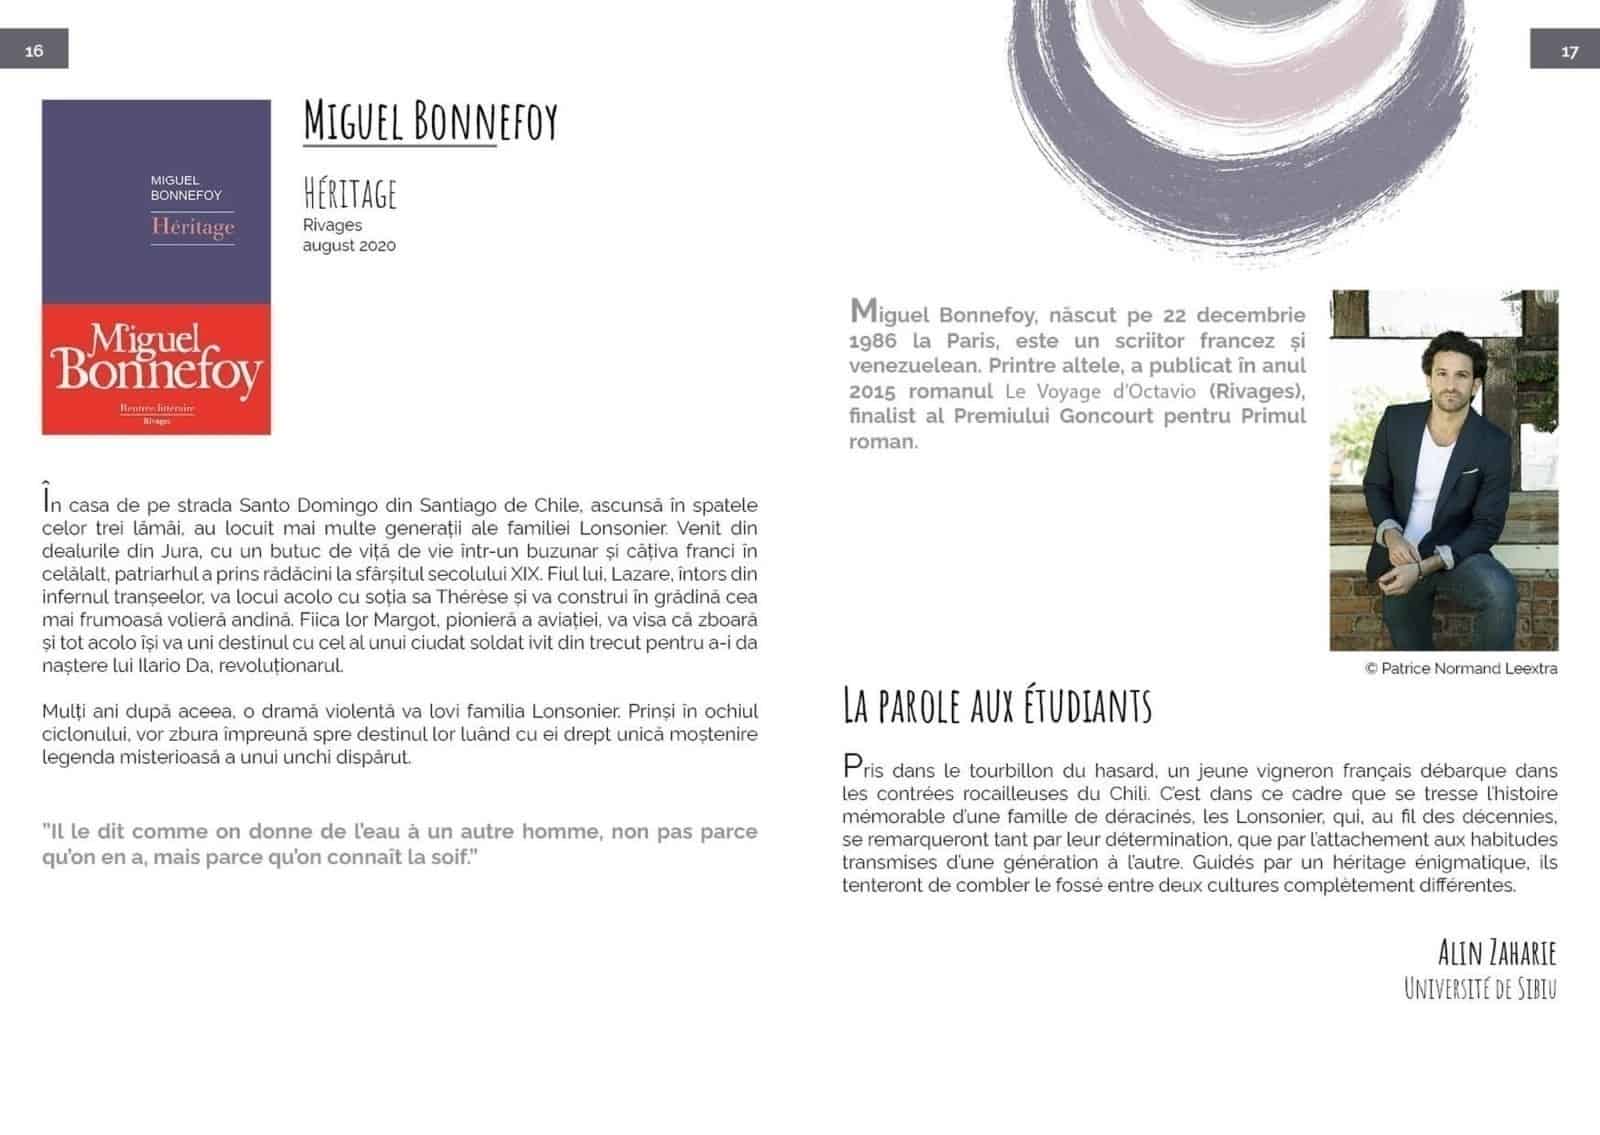 Premiul Goncourt, design, publishing design, Toud, Institutul francez din Romania, booklet